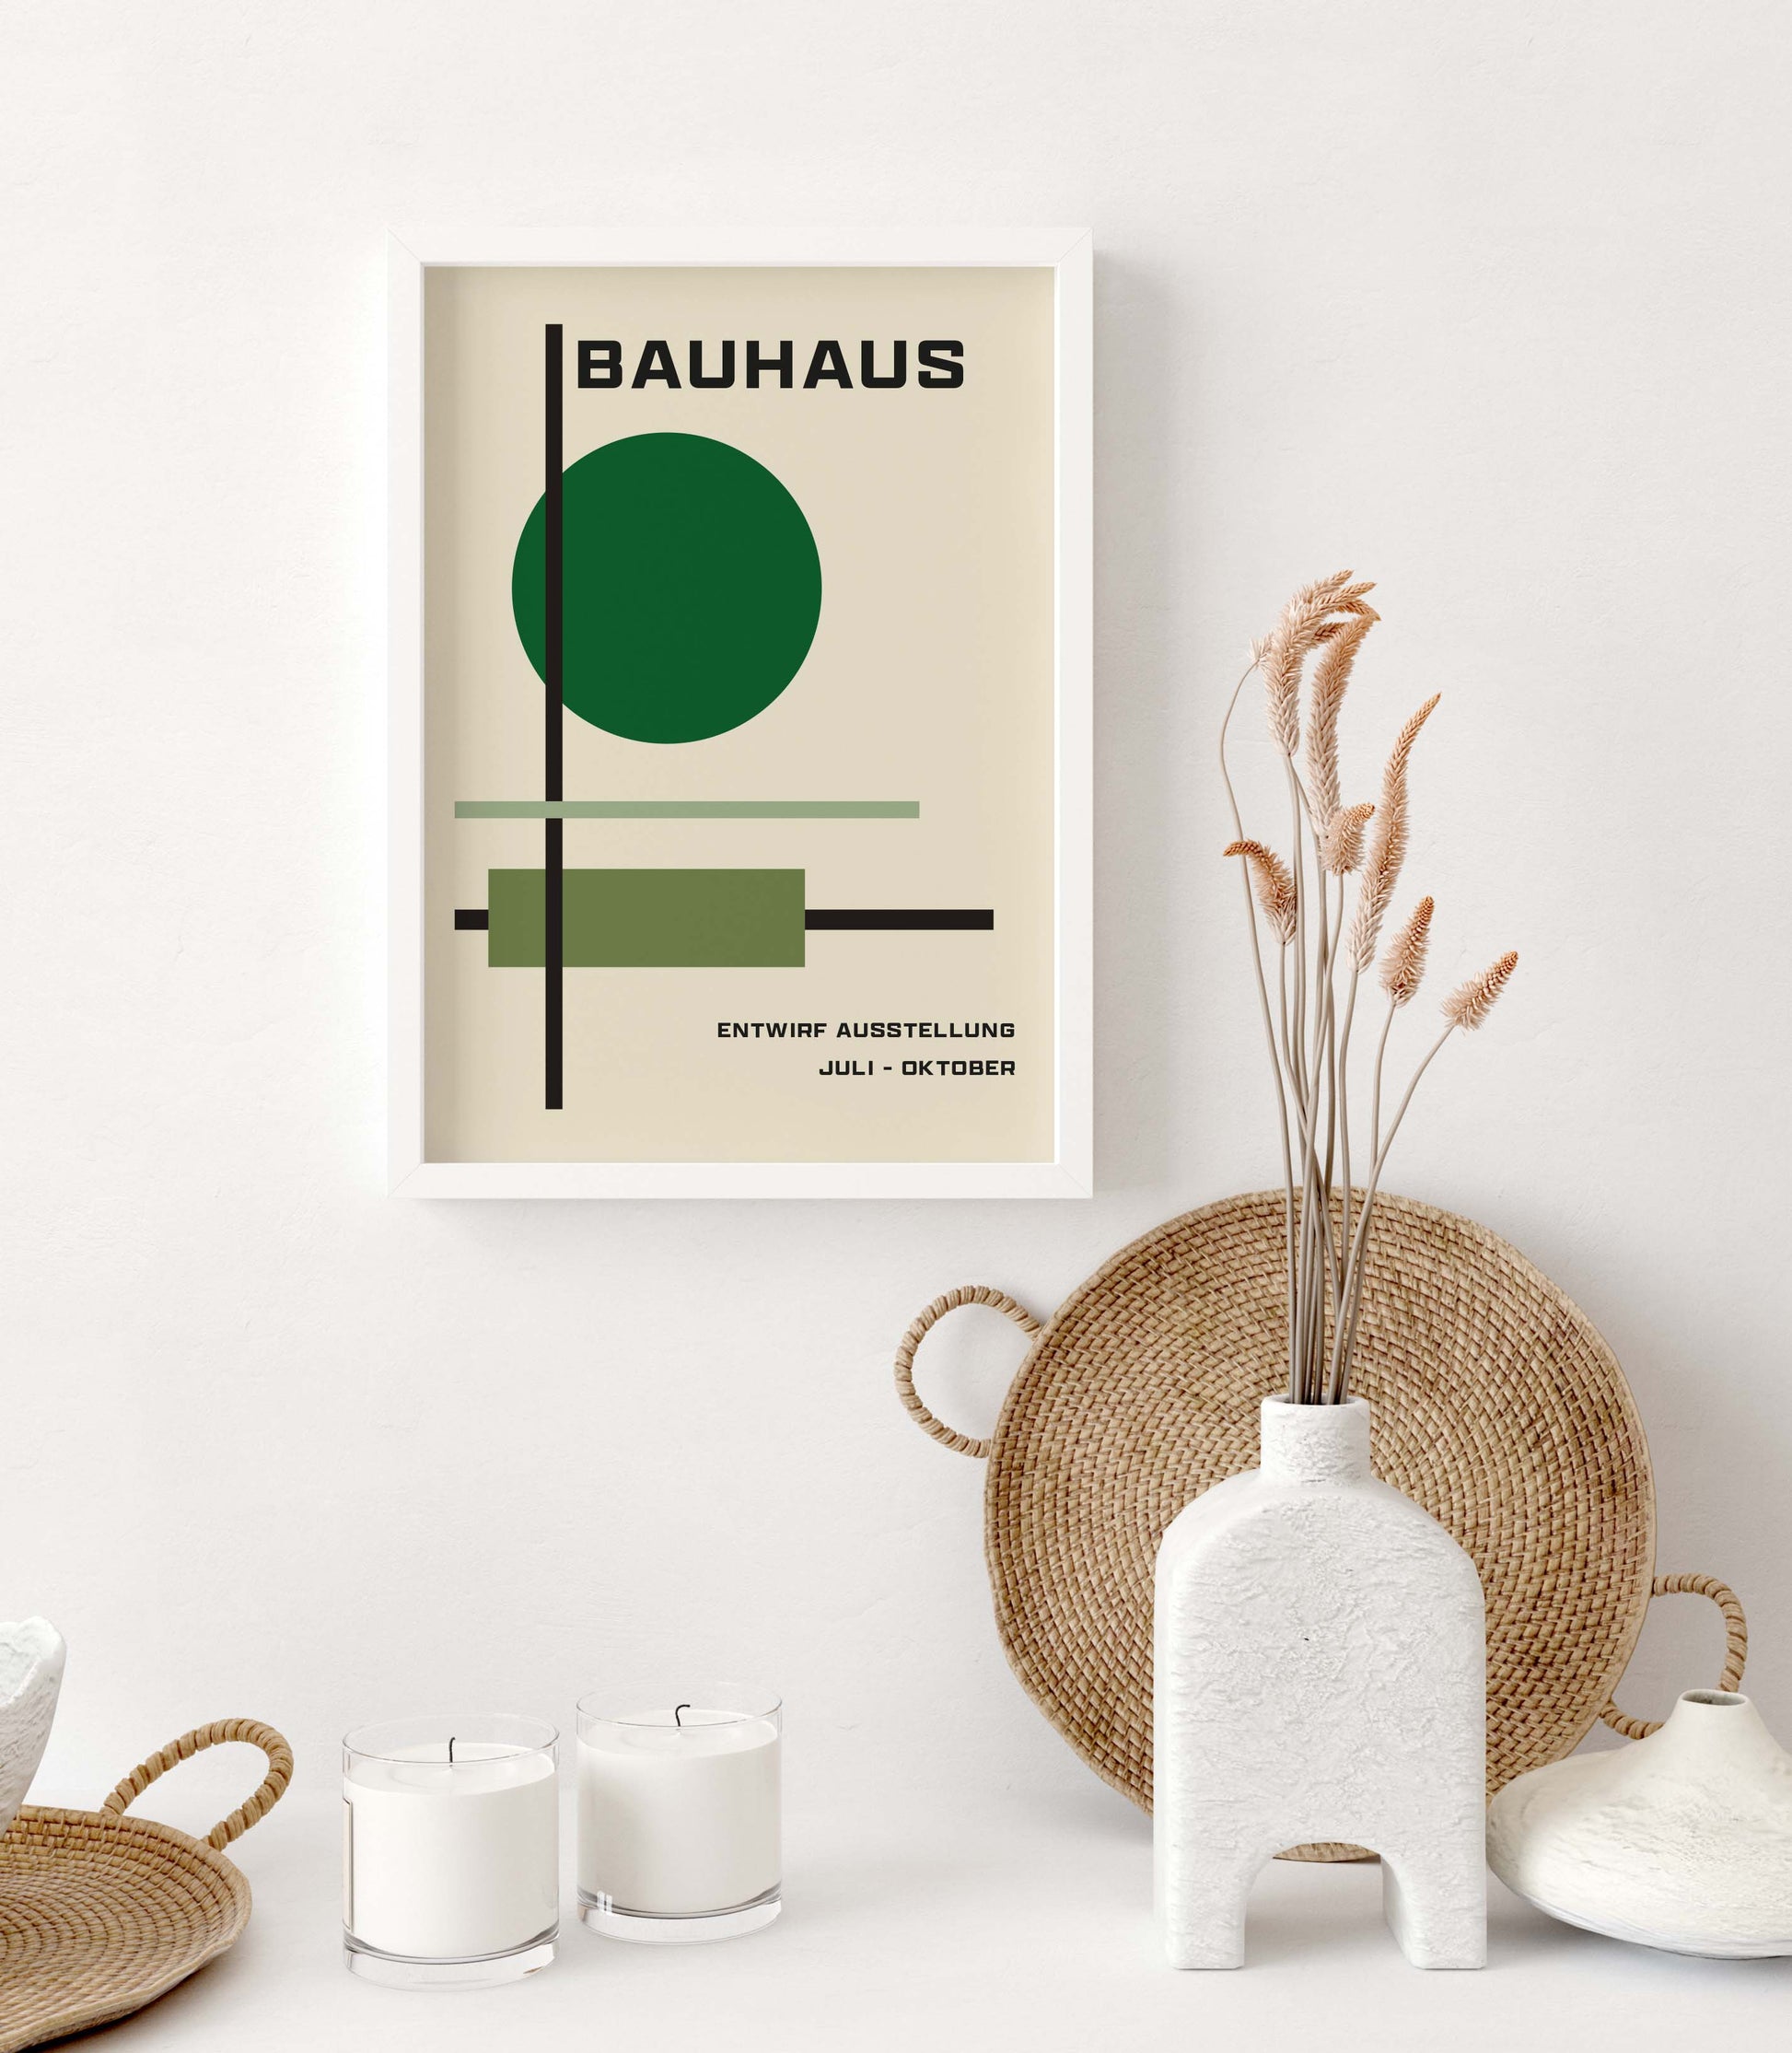 Simple Bauhaus poster in green